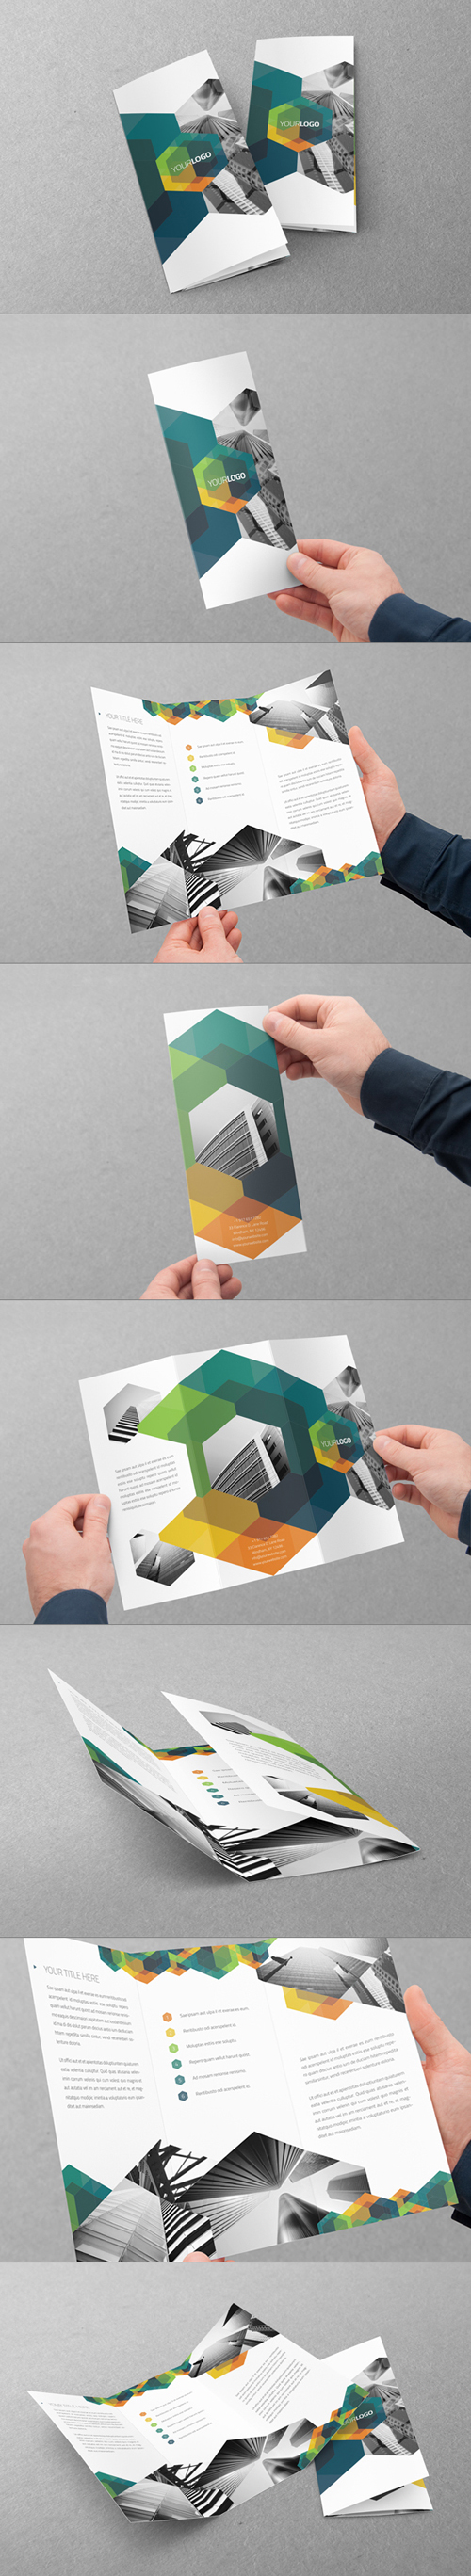 Hexo Trifold Brochure Design